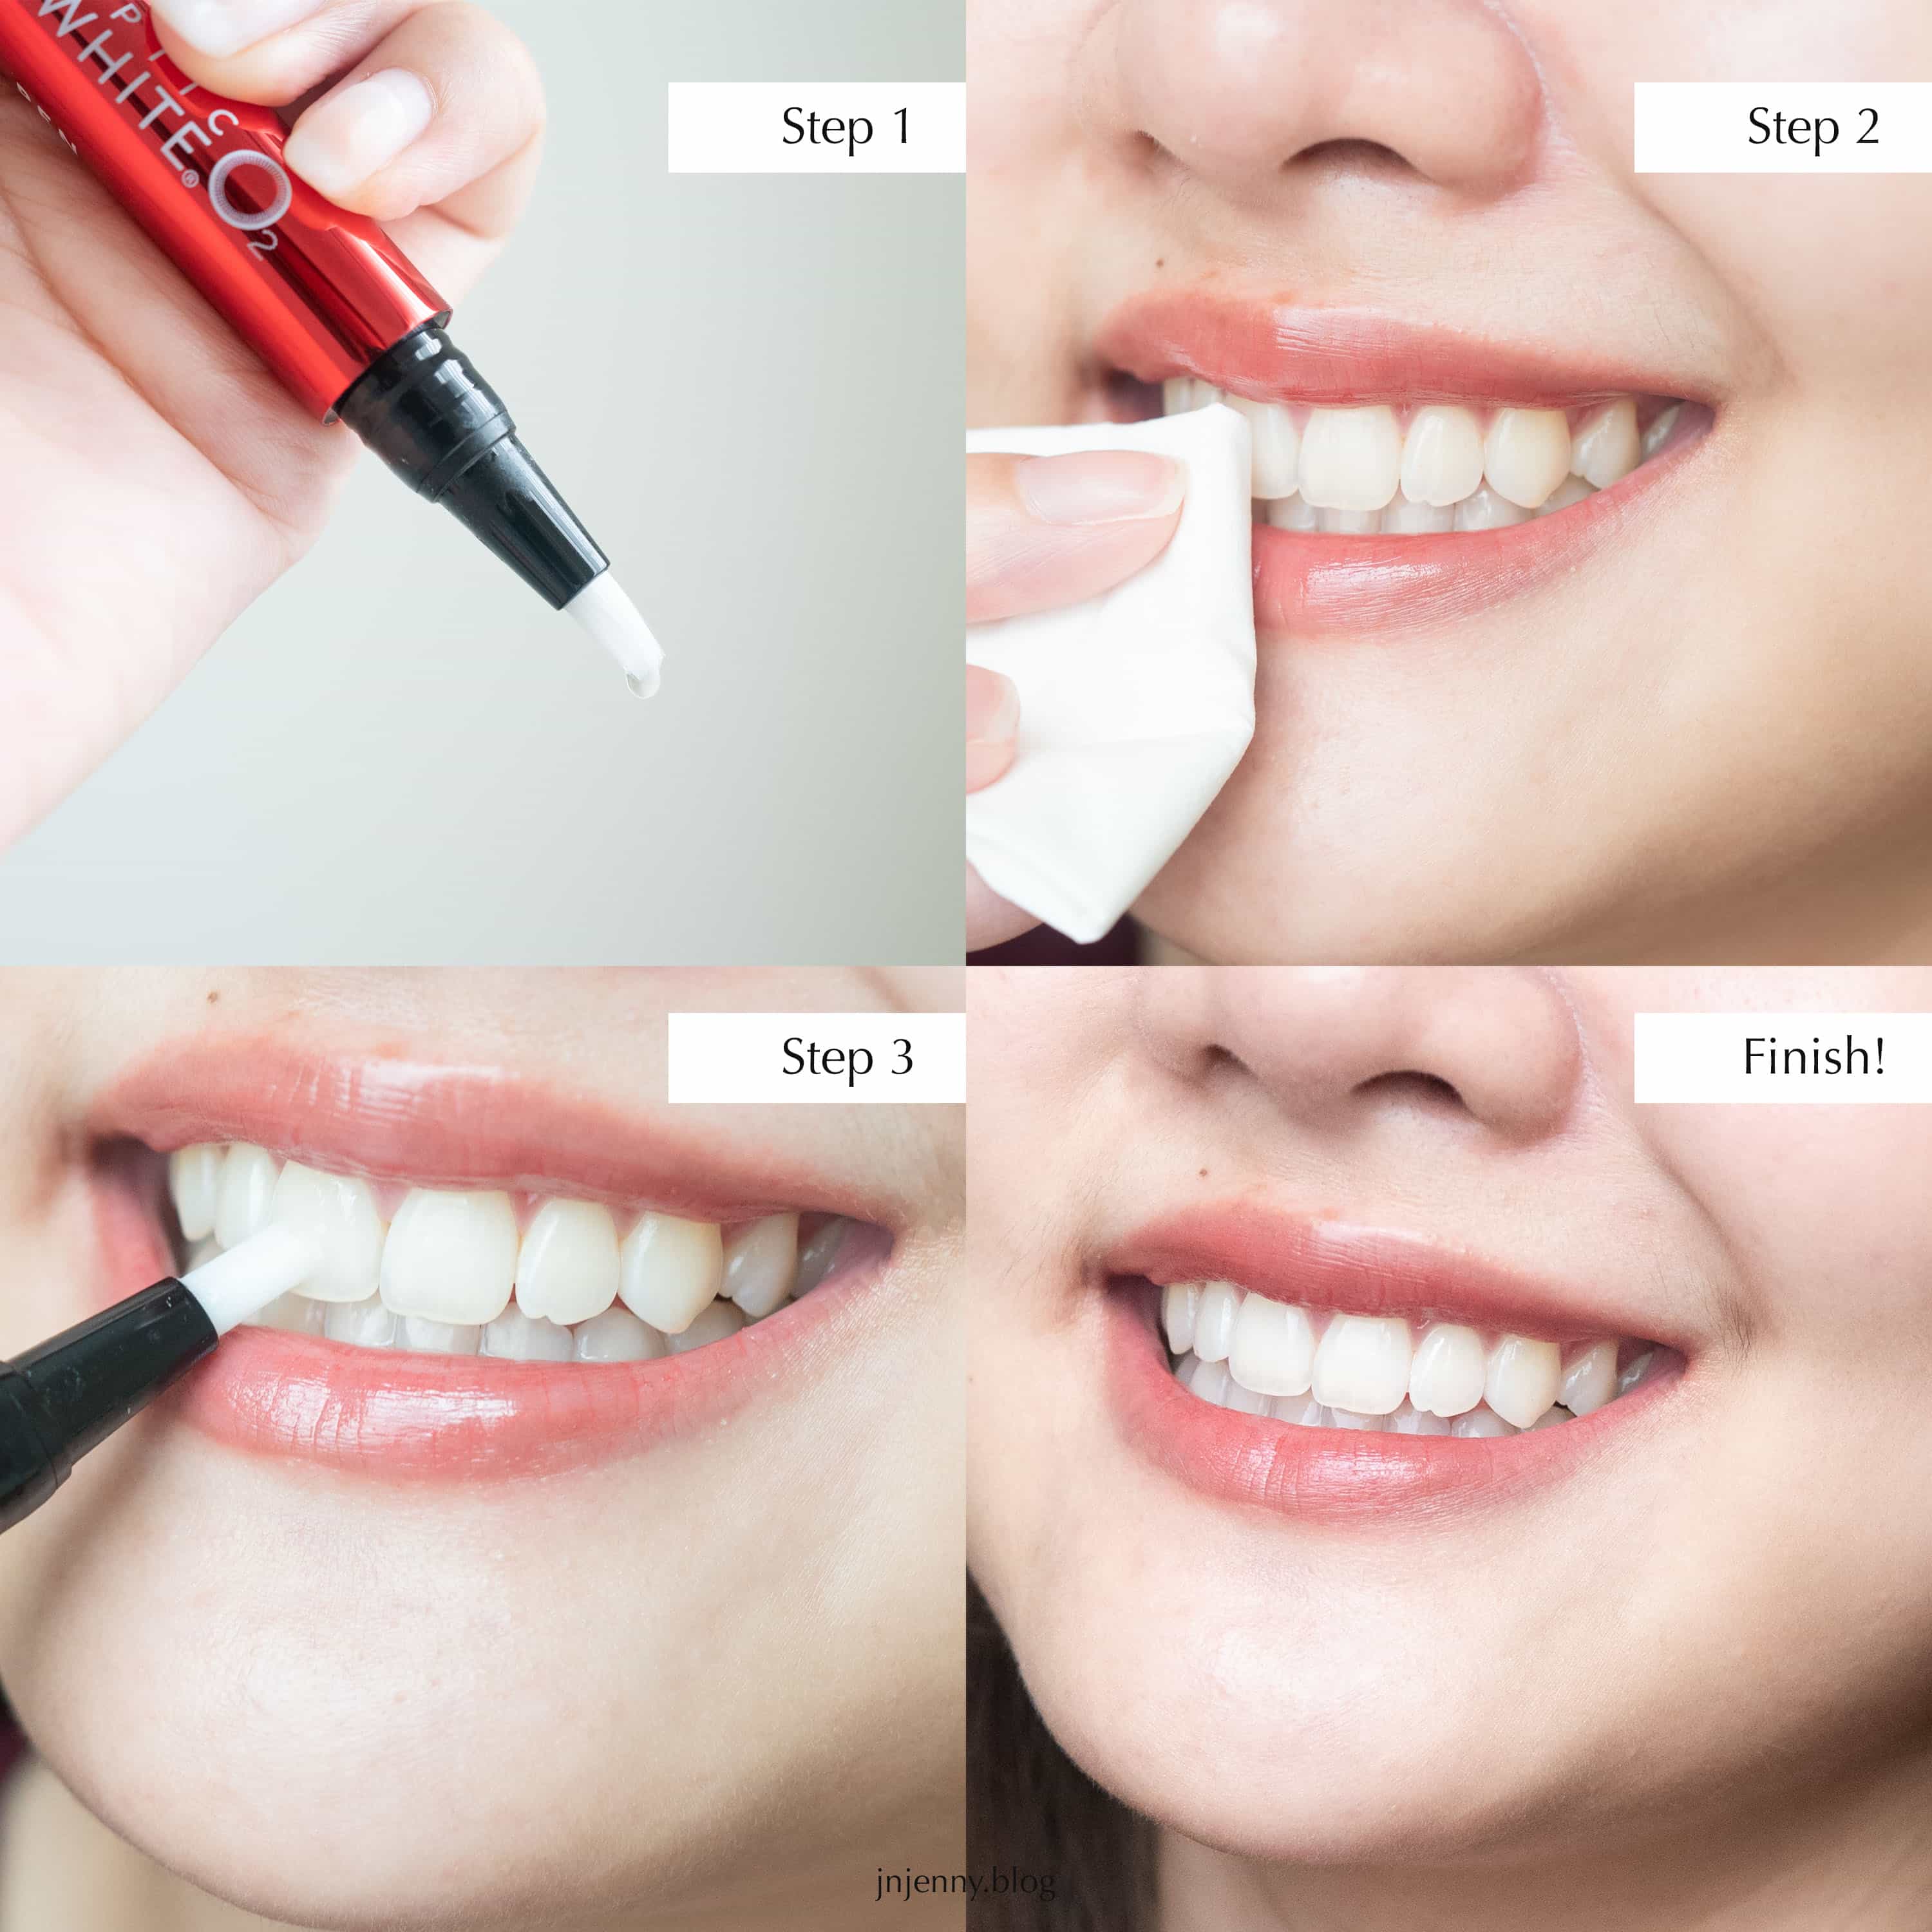 Review ] รีวิวปากกาฟอกฟันขาว Colgate Optic White O2 Teeth Whitening Pen  ฟันขาวง่ายๆ ไม่เสียวฟัน